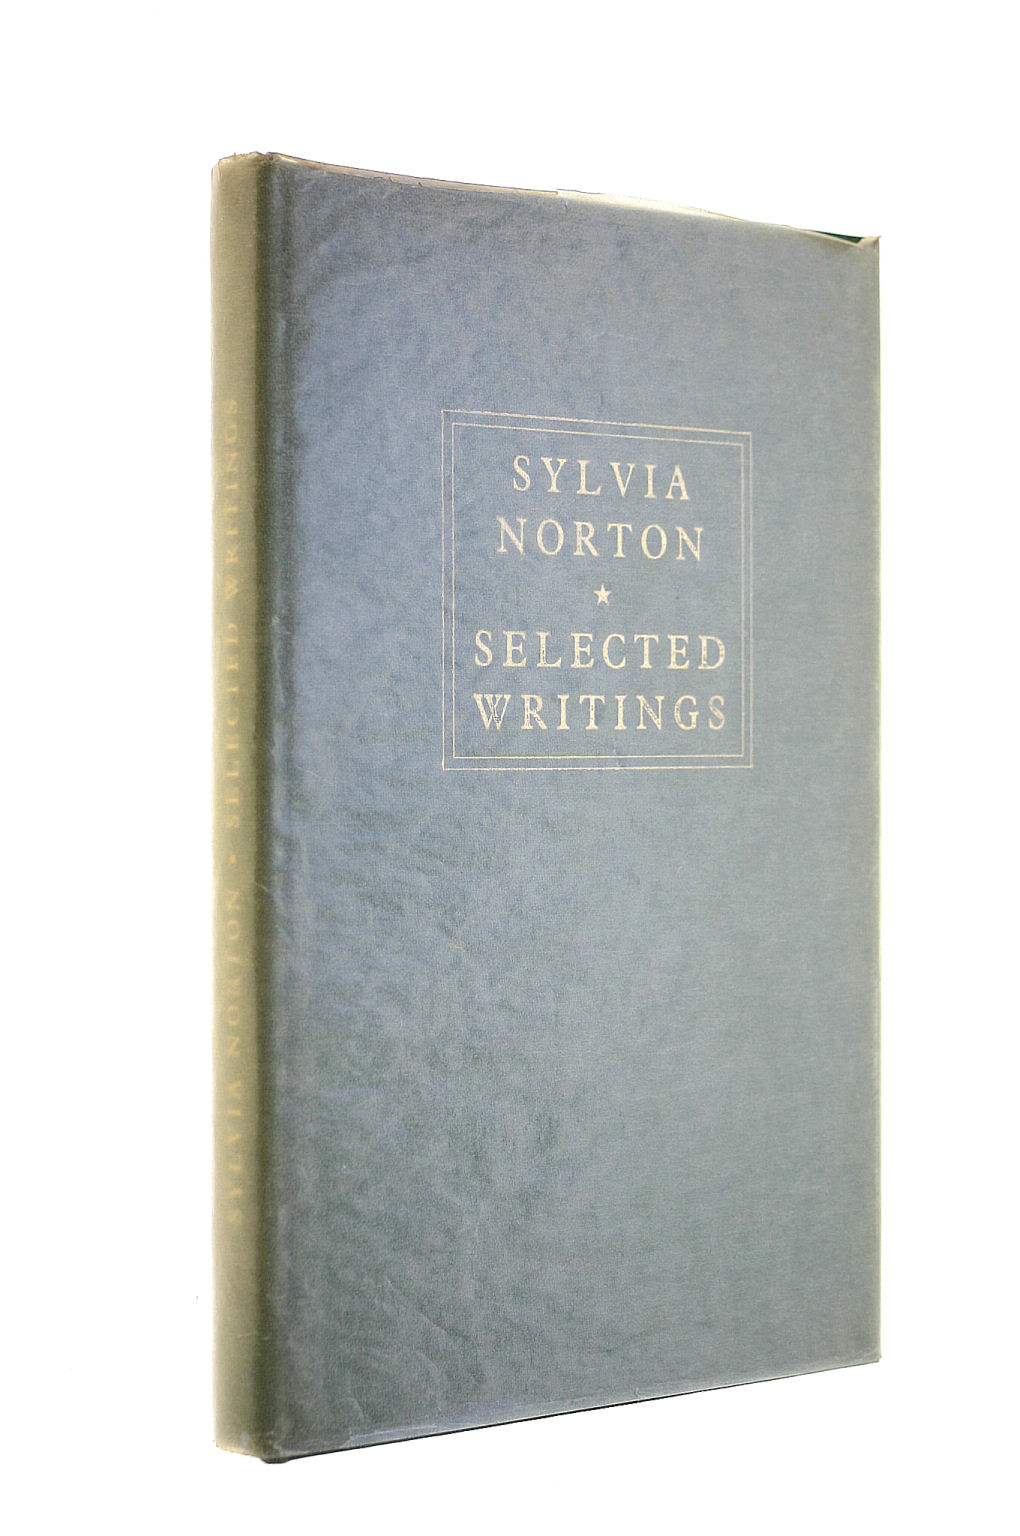 NO AUTHOR. - SYLVIA NORTON: SELECTED WRITINGS.